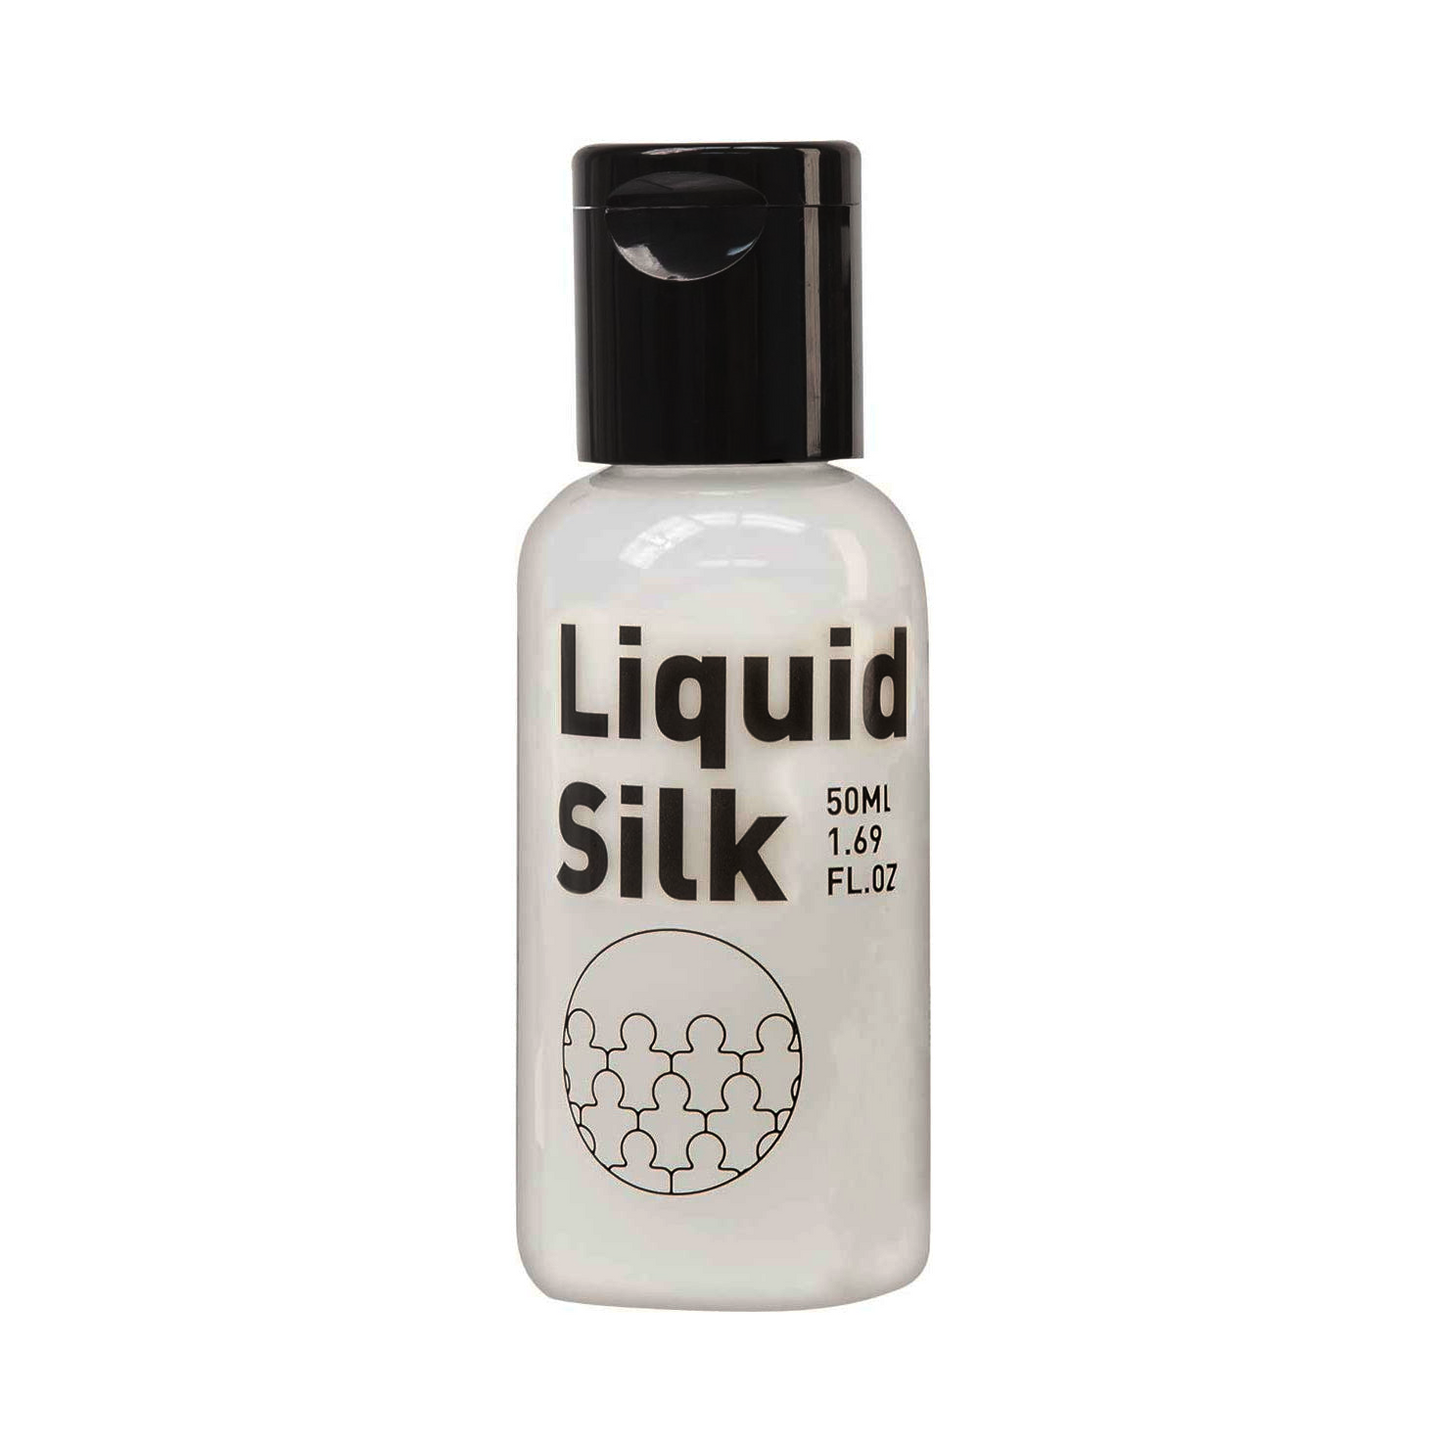 Liquid Silk Water Based Lube - 50ml - Thorn & Feather